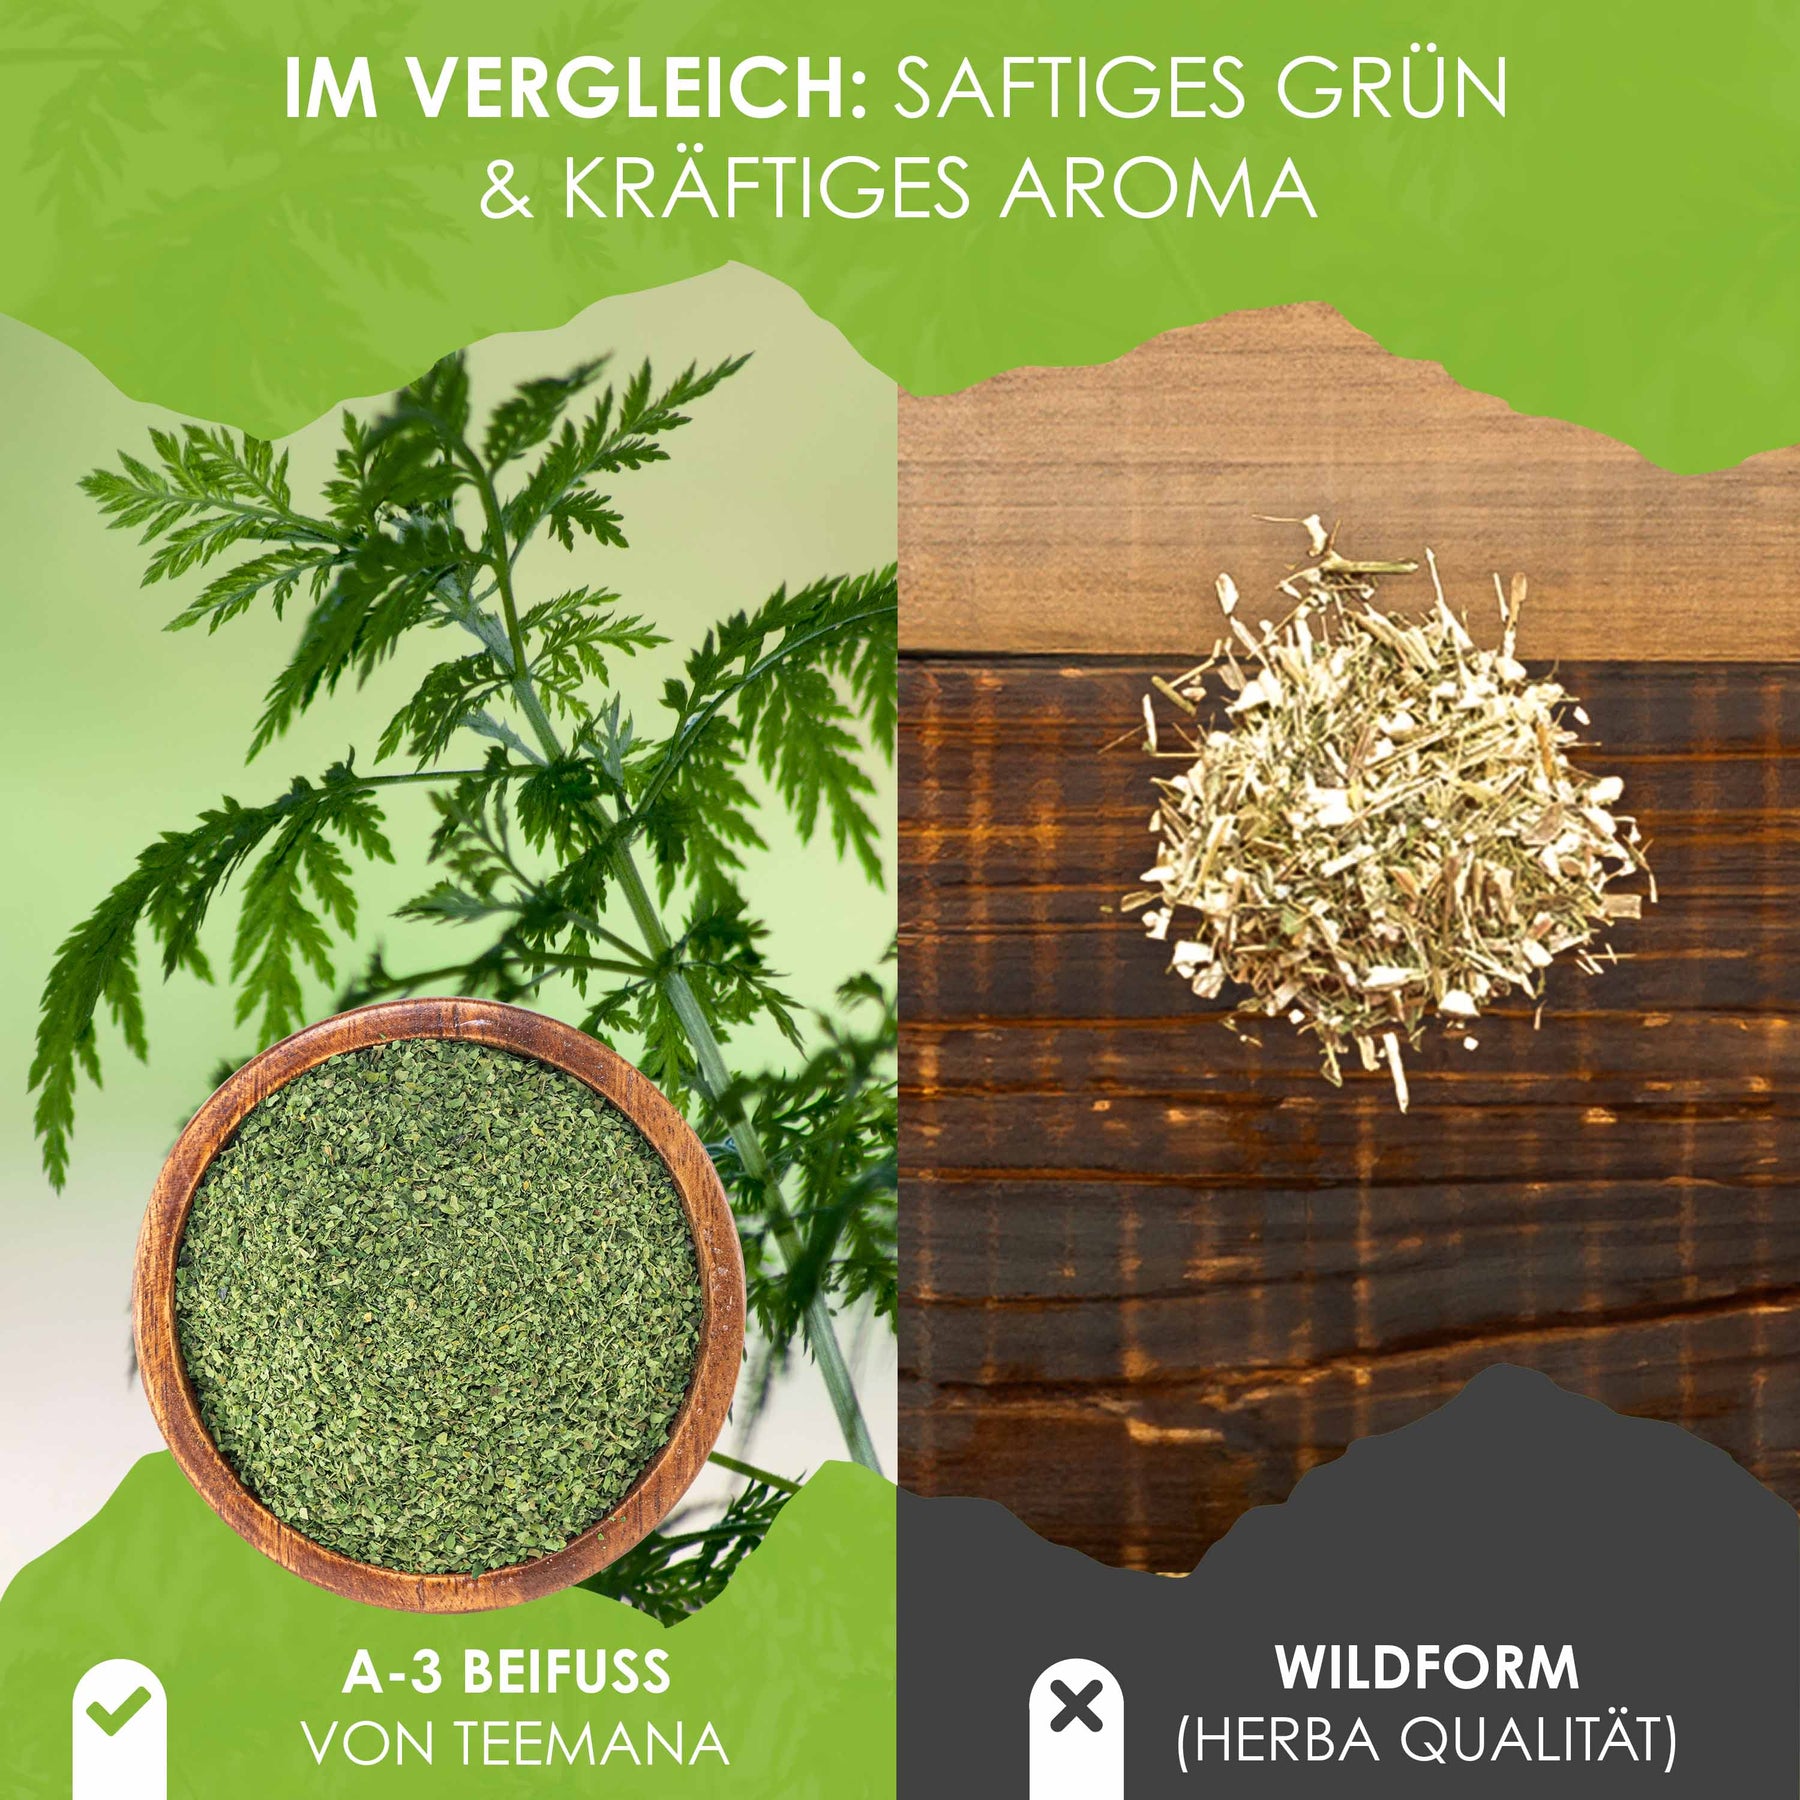 Artemisia annua anamed (A-3) leaf powder